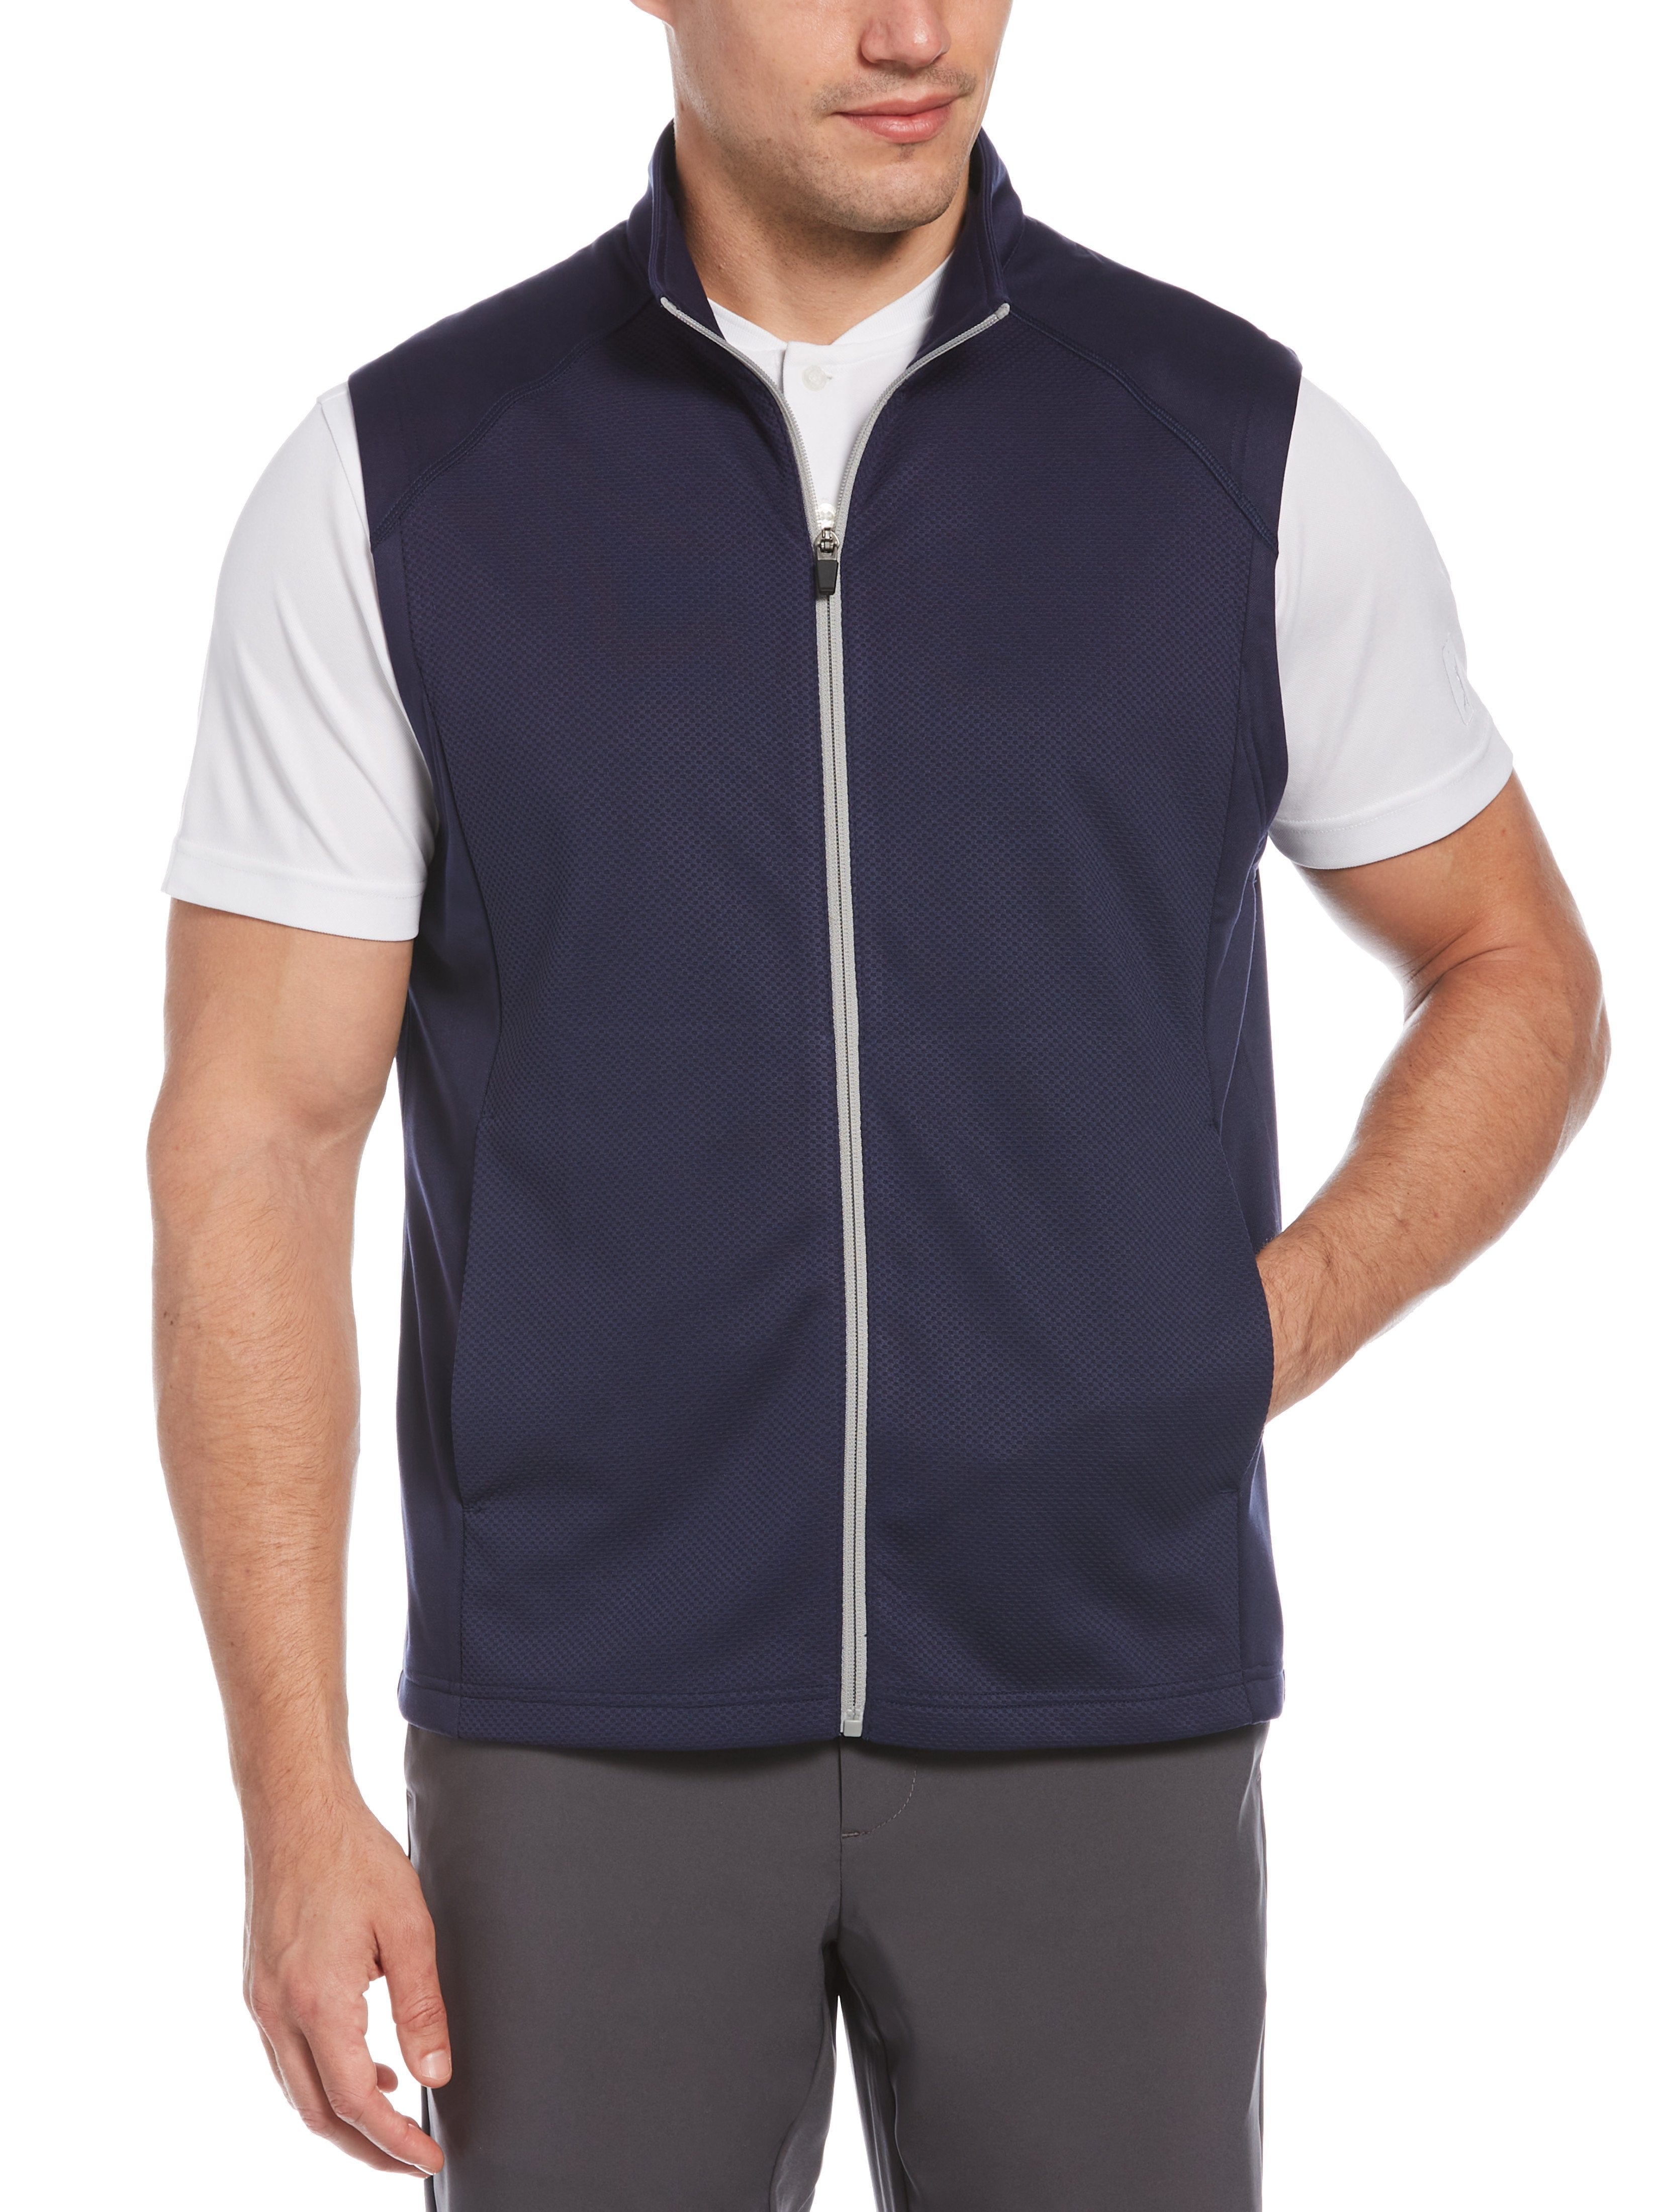 PGA TOUR Apparel Mens Mixed Texture Fleece Golf Vest Top, Size Large, Navy Blue, 100% Polyester | Golf Apparel Shop